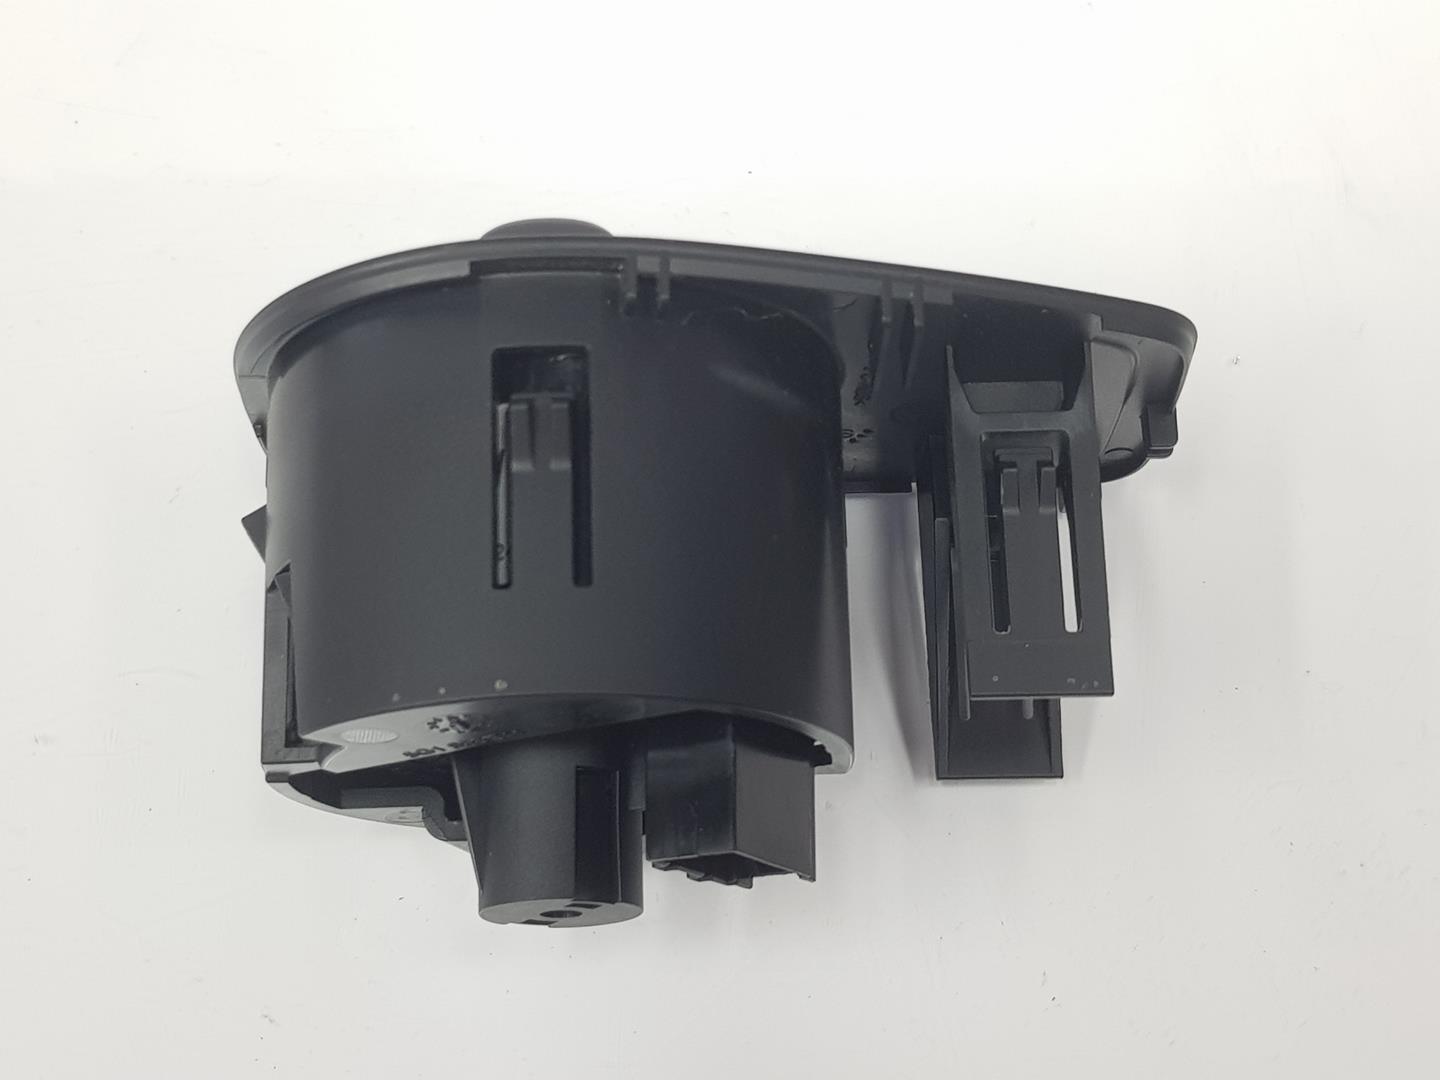 VOLKSWAGEN Variant VII TDI (2014-2024) Headlight Switch Control Unit 5G0941431BD, 5G0941431BD 19797366